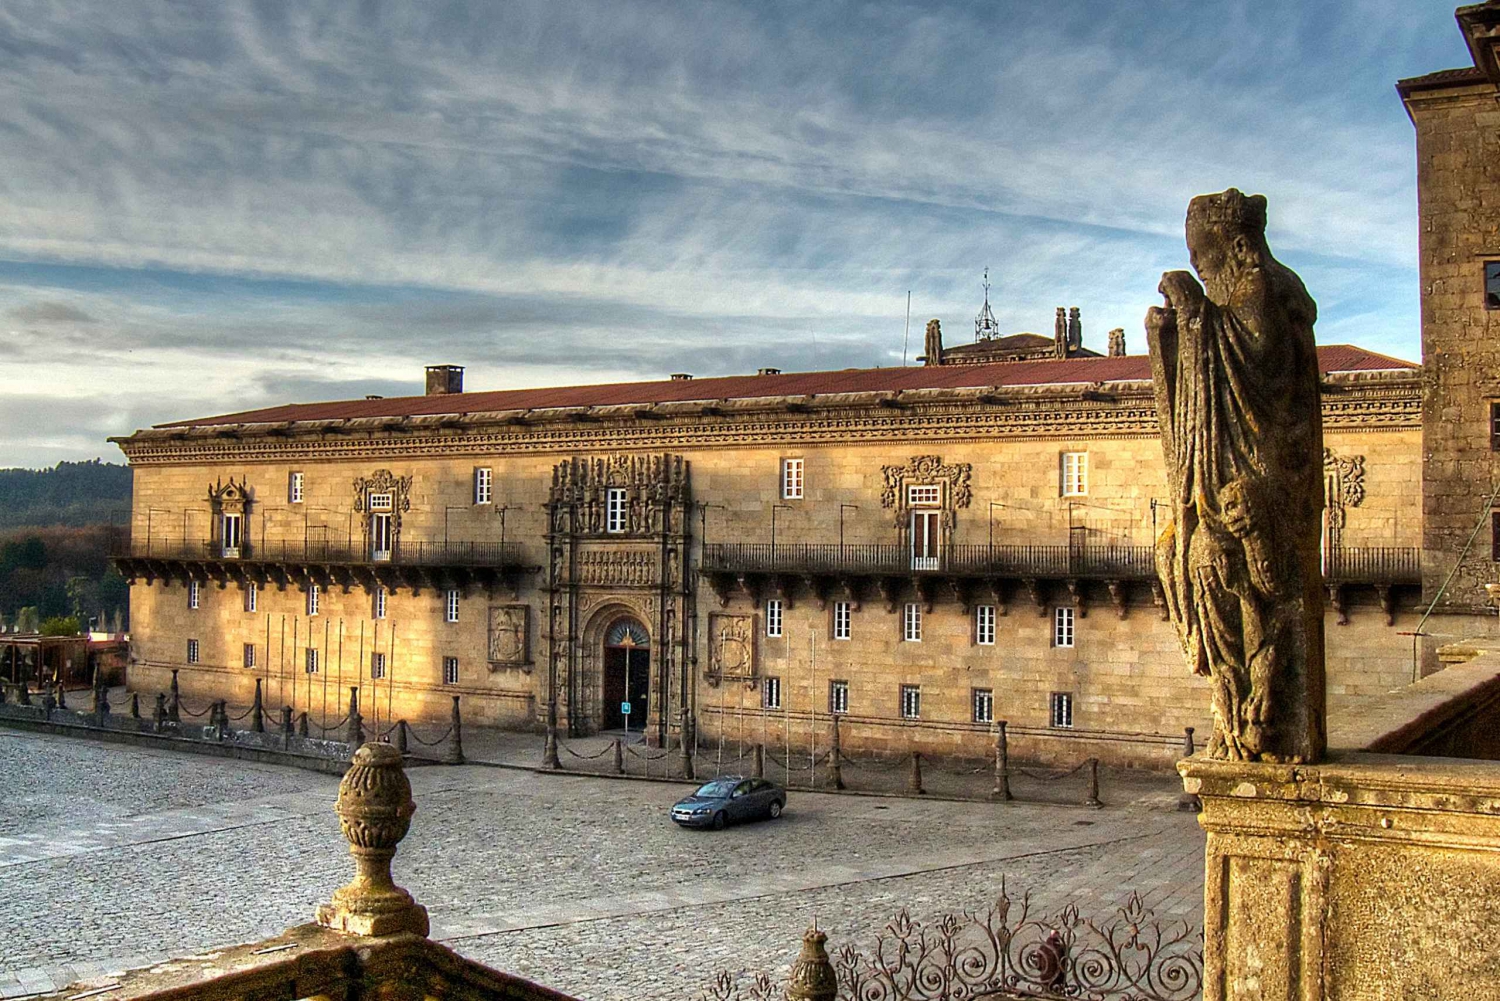 Santiago de Compostela: rundtur i Hostal de los Reyes Católicos